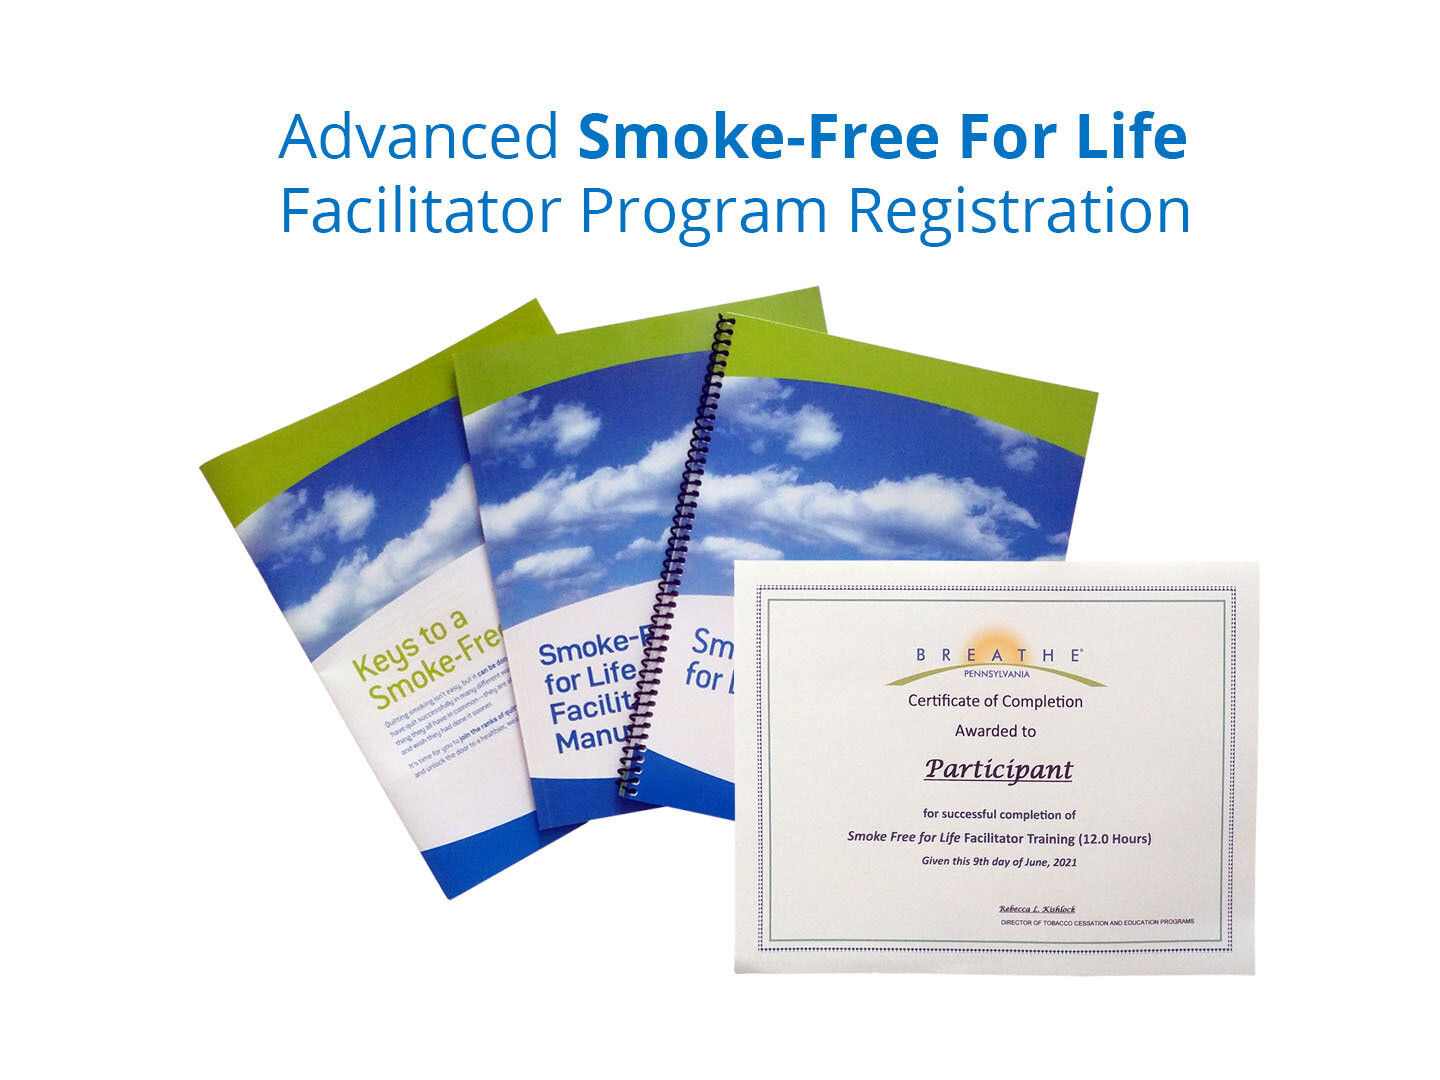 Advanced "Smoke-Free For Life" Facilitator Training